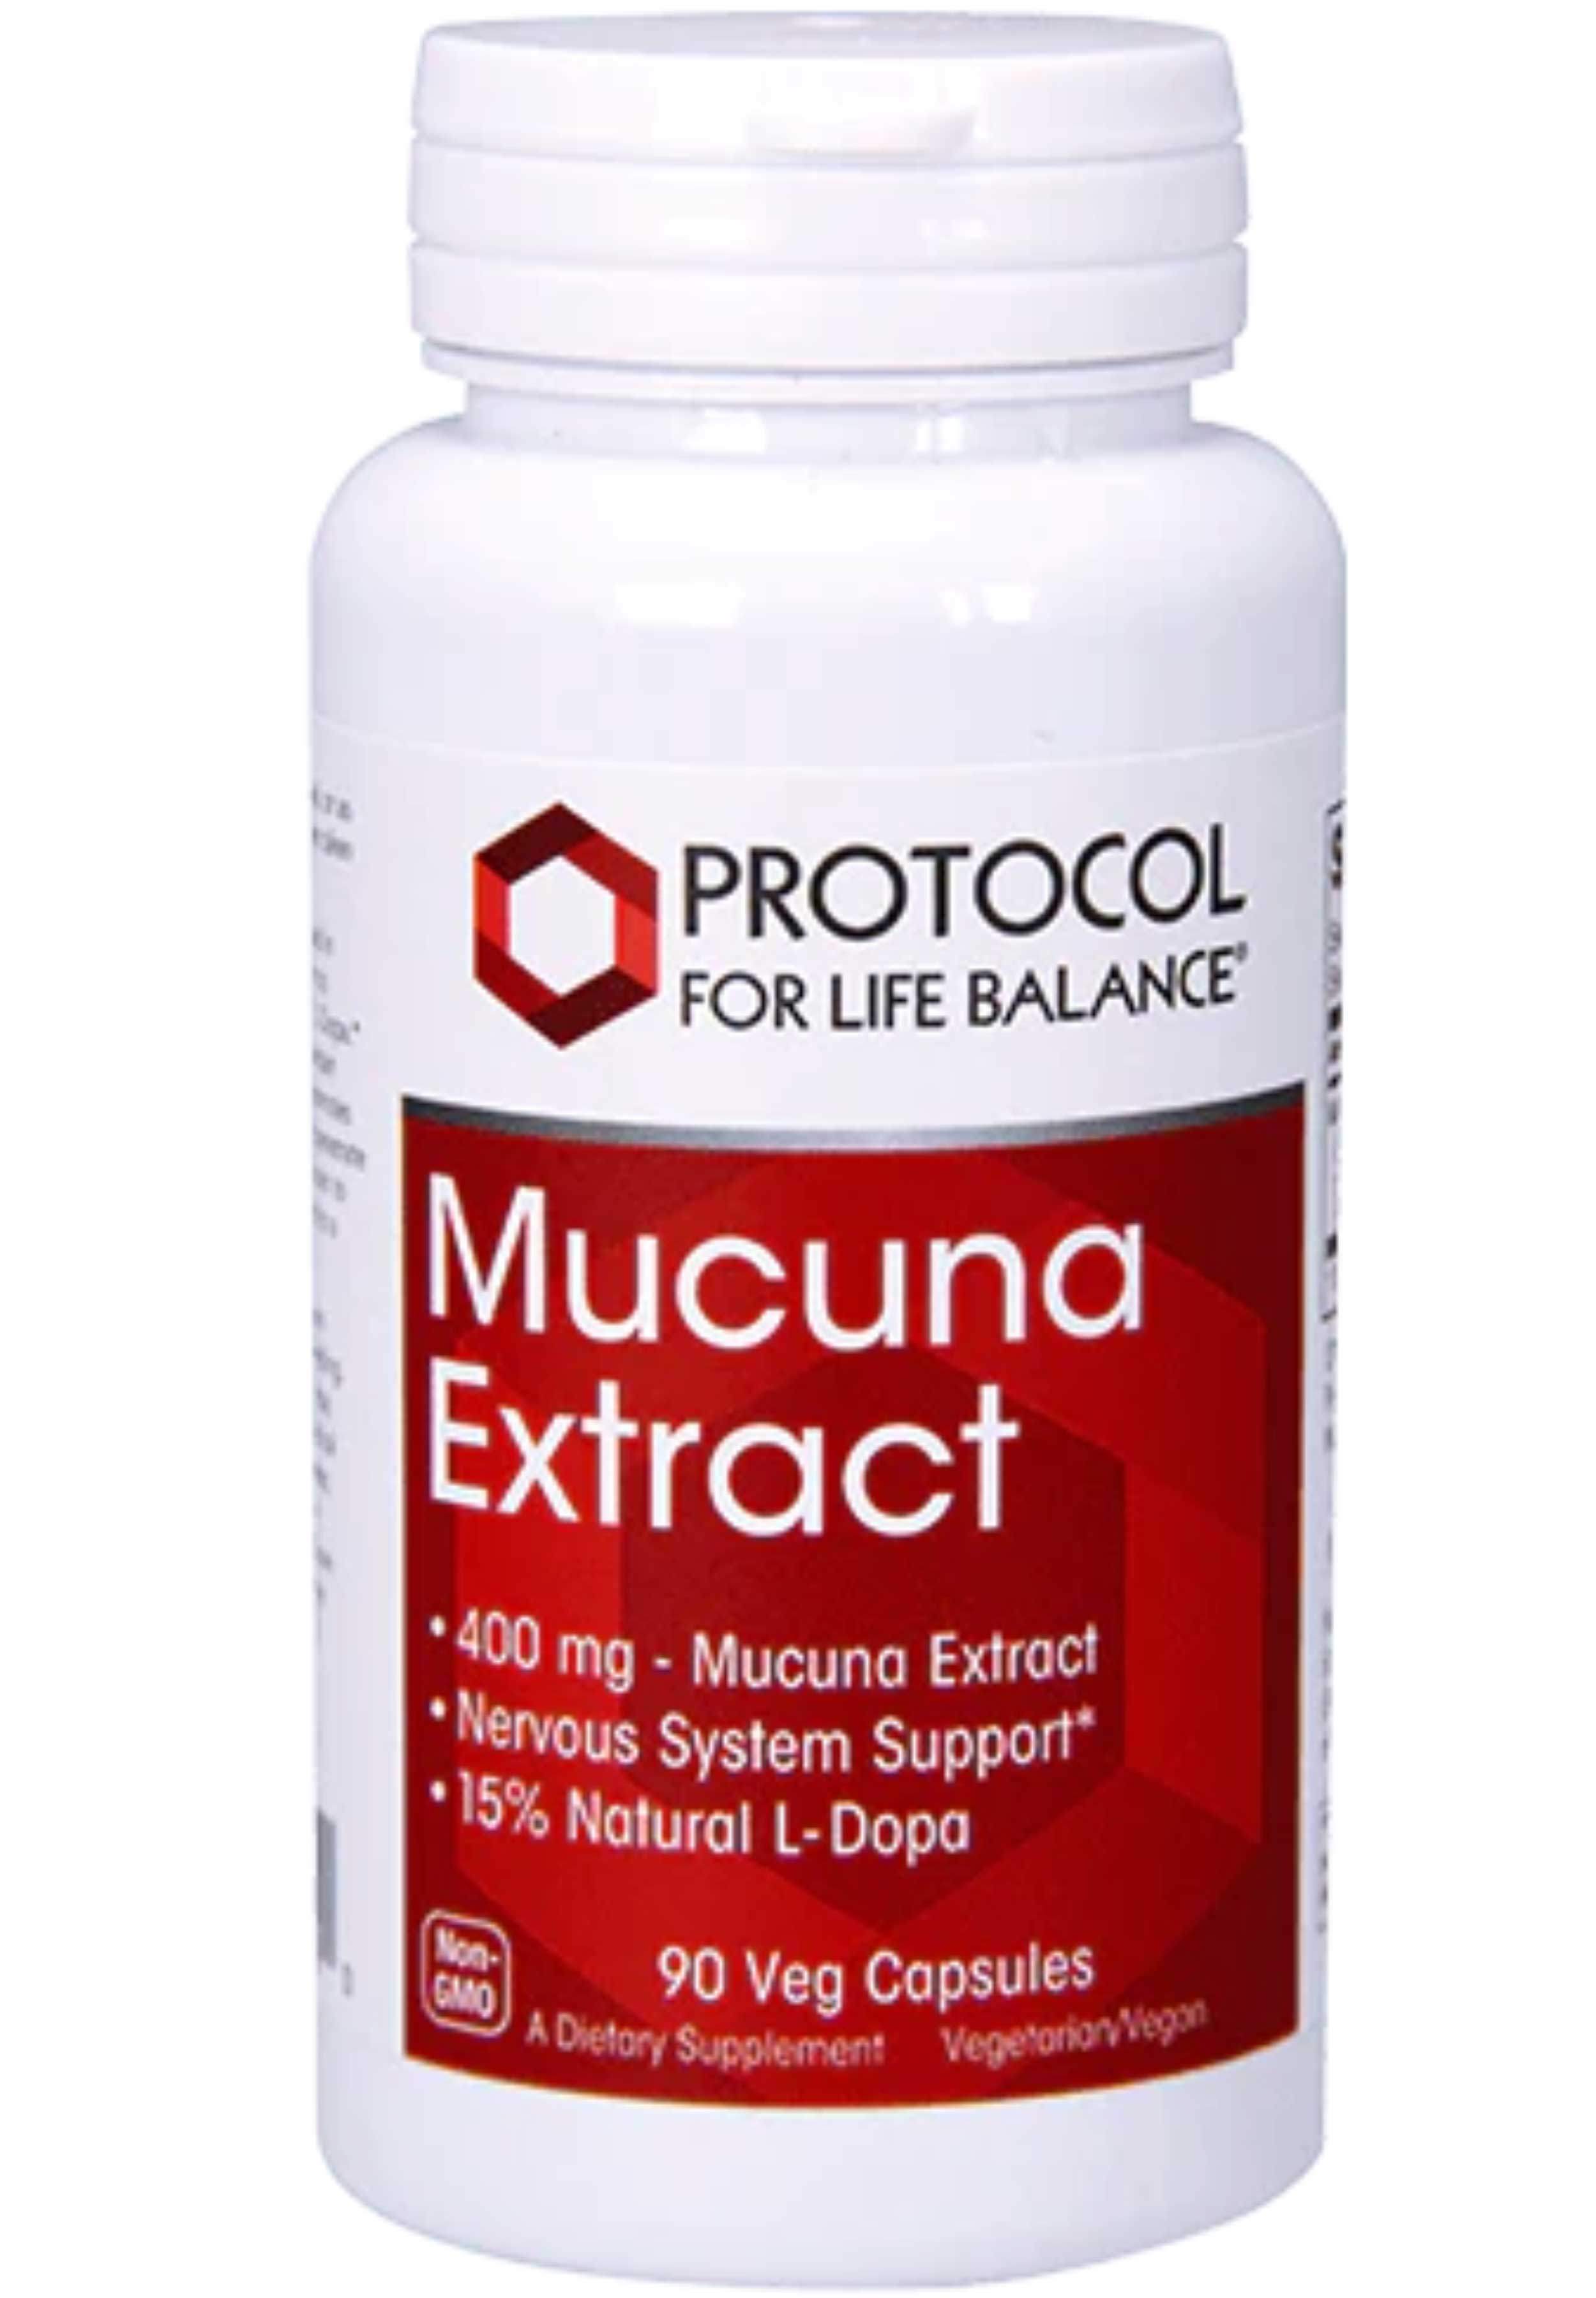 Protocol for Life Balance Mucuna Extract